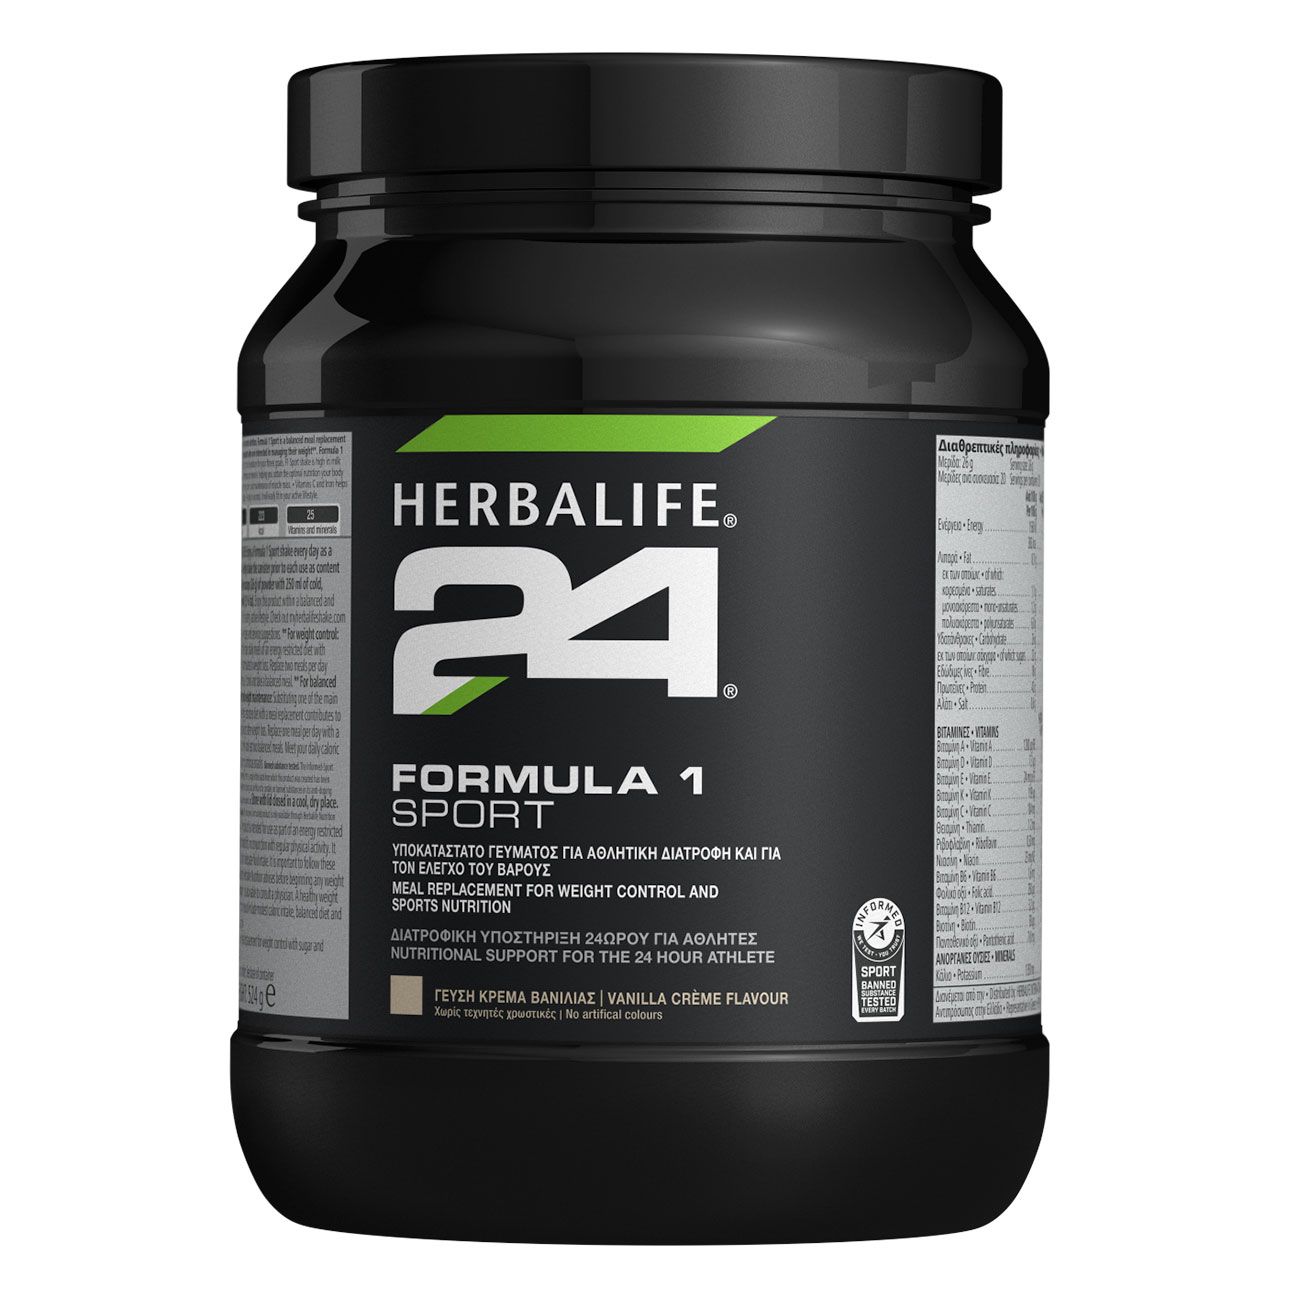 Herbalife24® Formula 1 Sport Πρωτεϊνούχο Ρόφημα  με Γεύση Vanilla Cream product shot